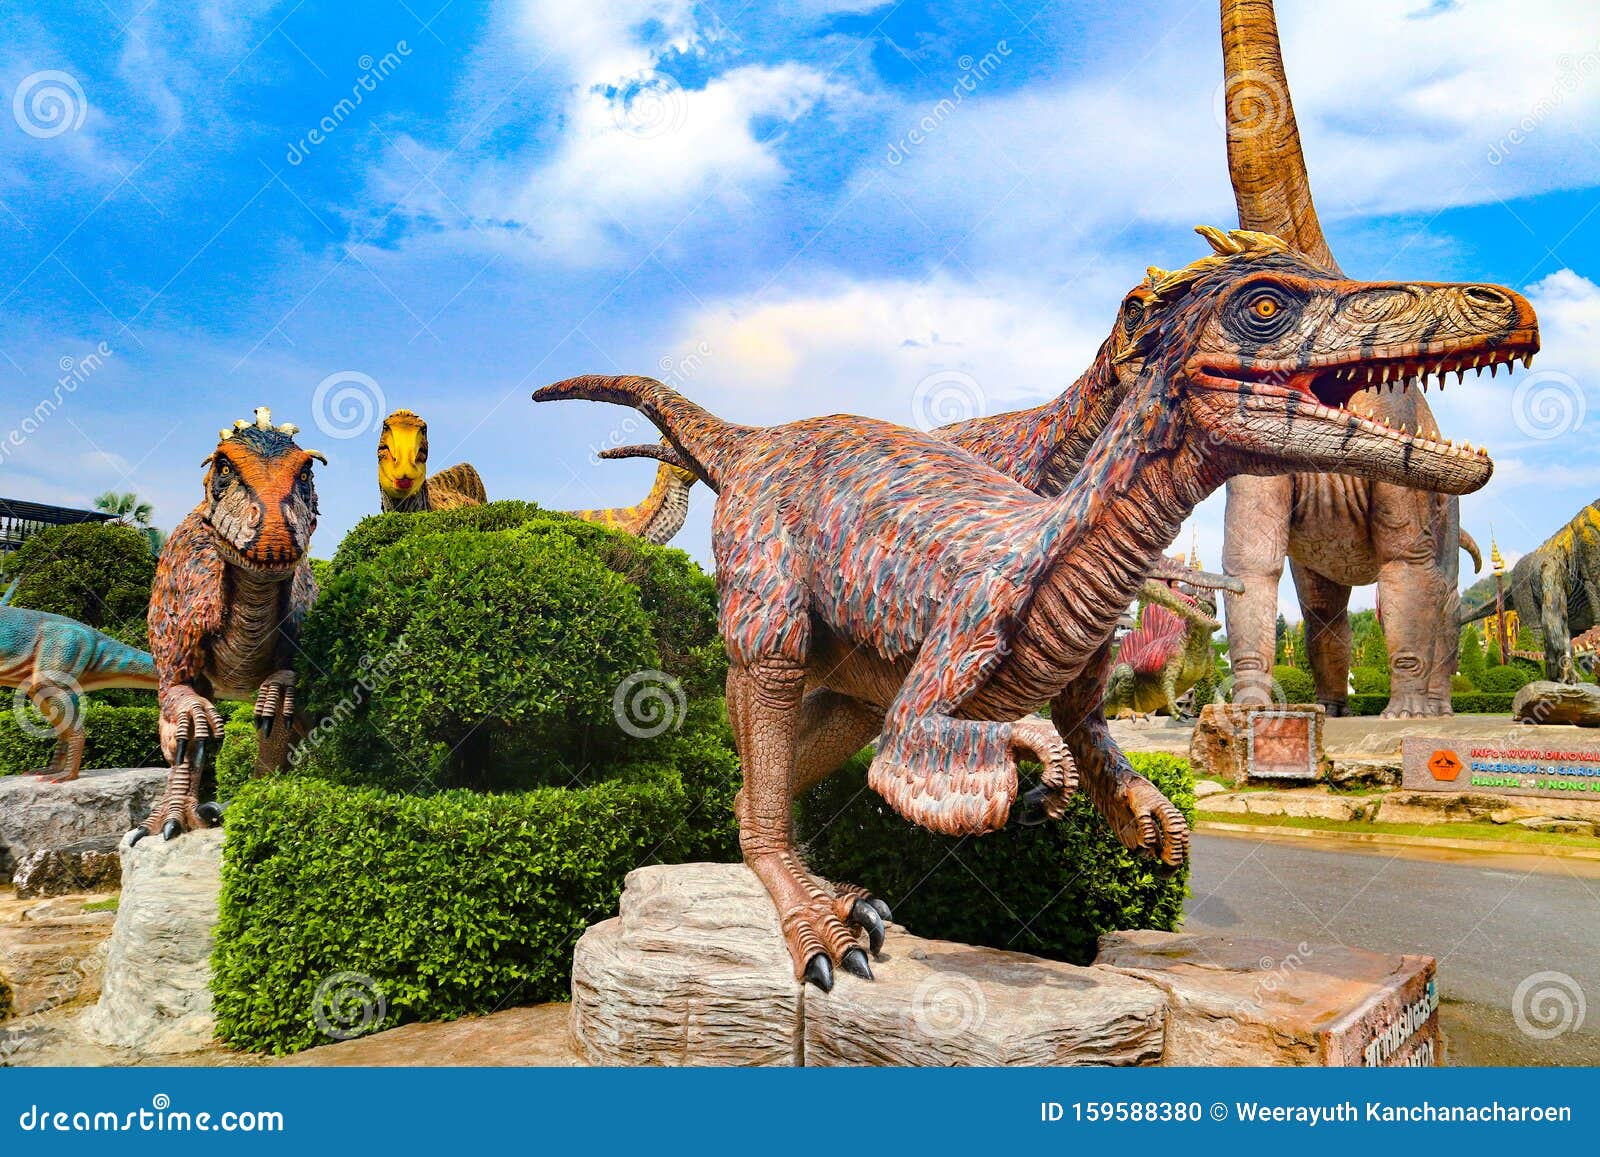 Dinosaur Statue And Animal Statue At Nong Nooch Tropical Botanical